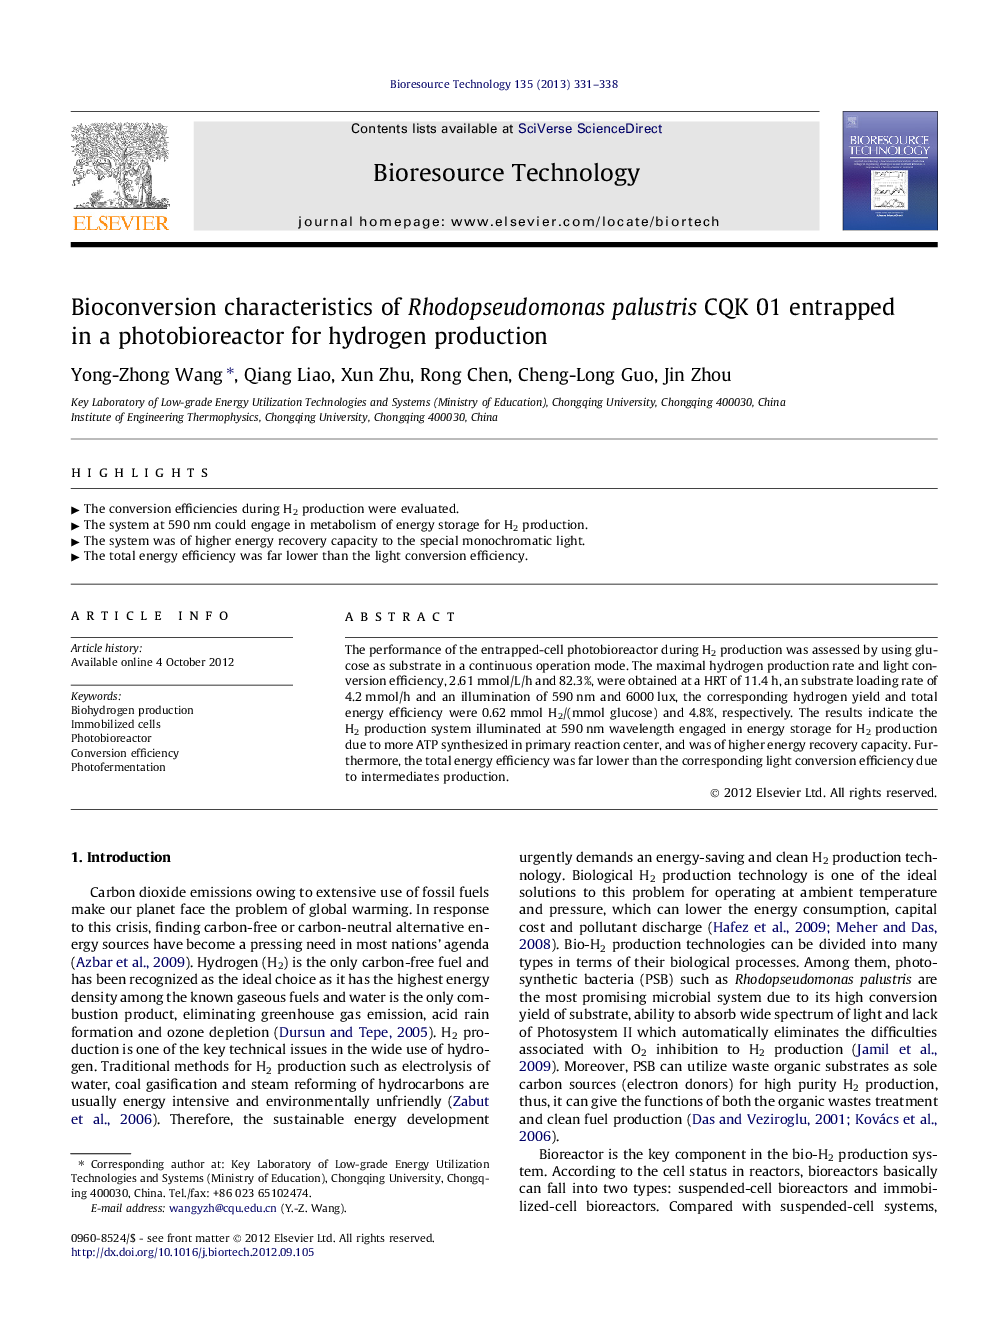 Bioconversion characteristics of Rhodopseudomonas palustris CQK 01 entrapped in a photobioreactor for hydrogen production